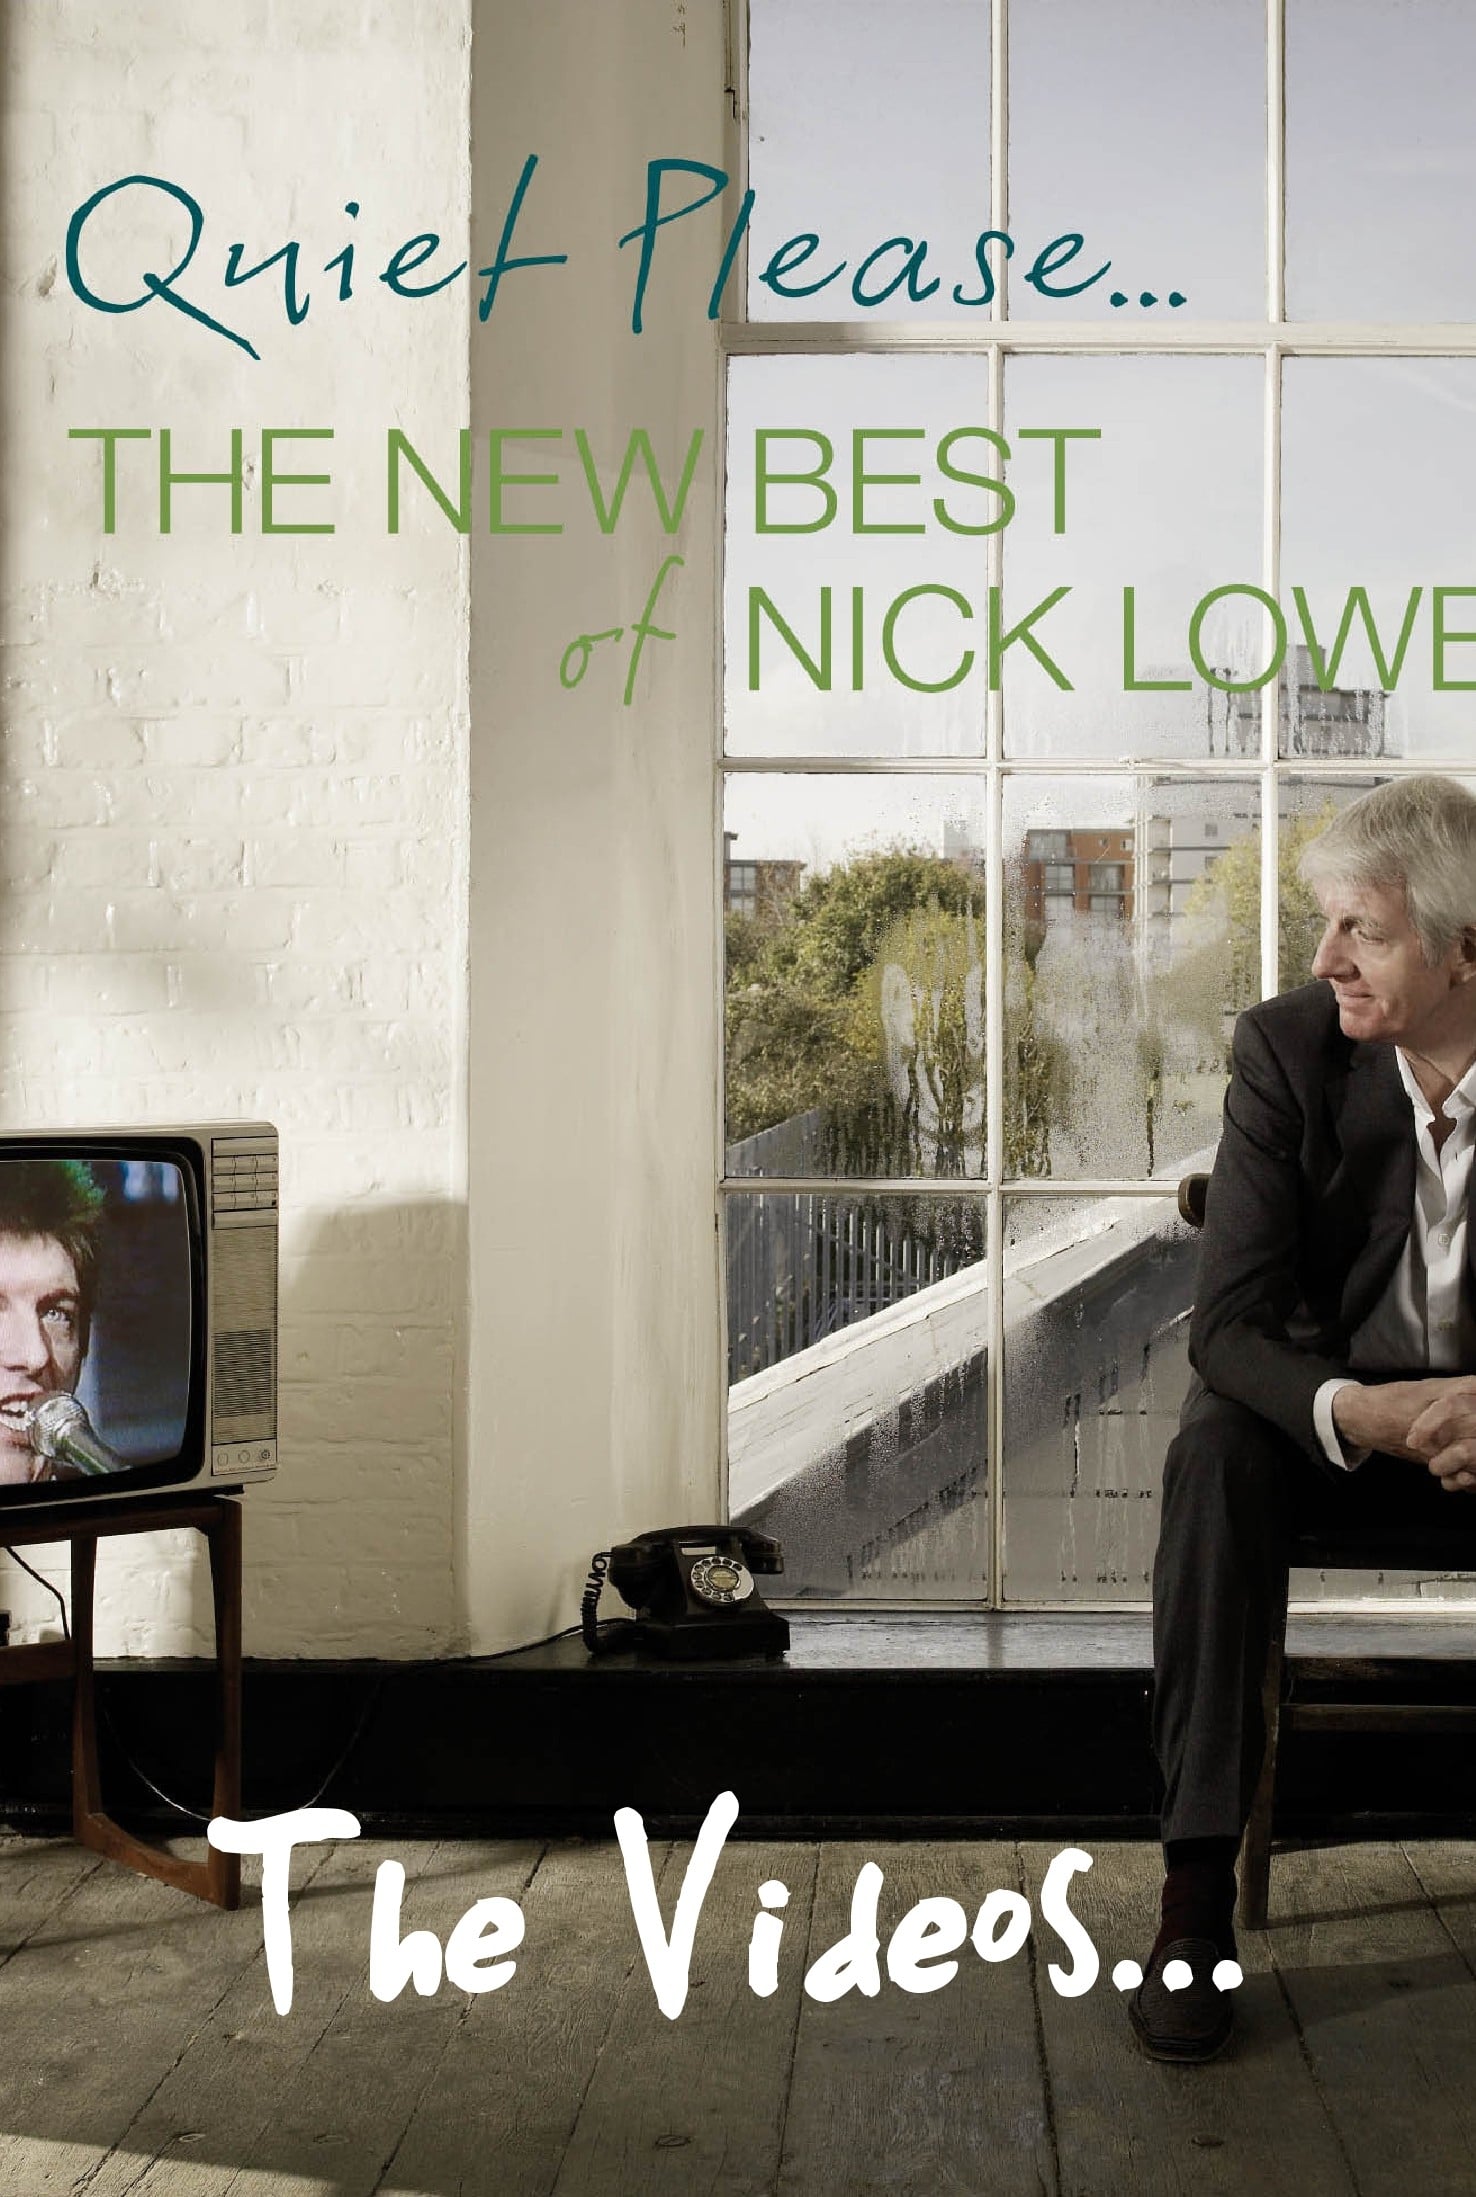 Nick Lowe: Quiet Please... The Videos